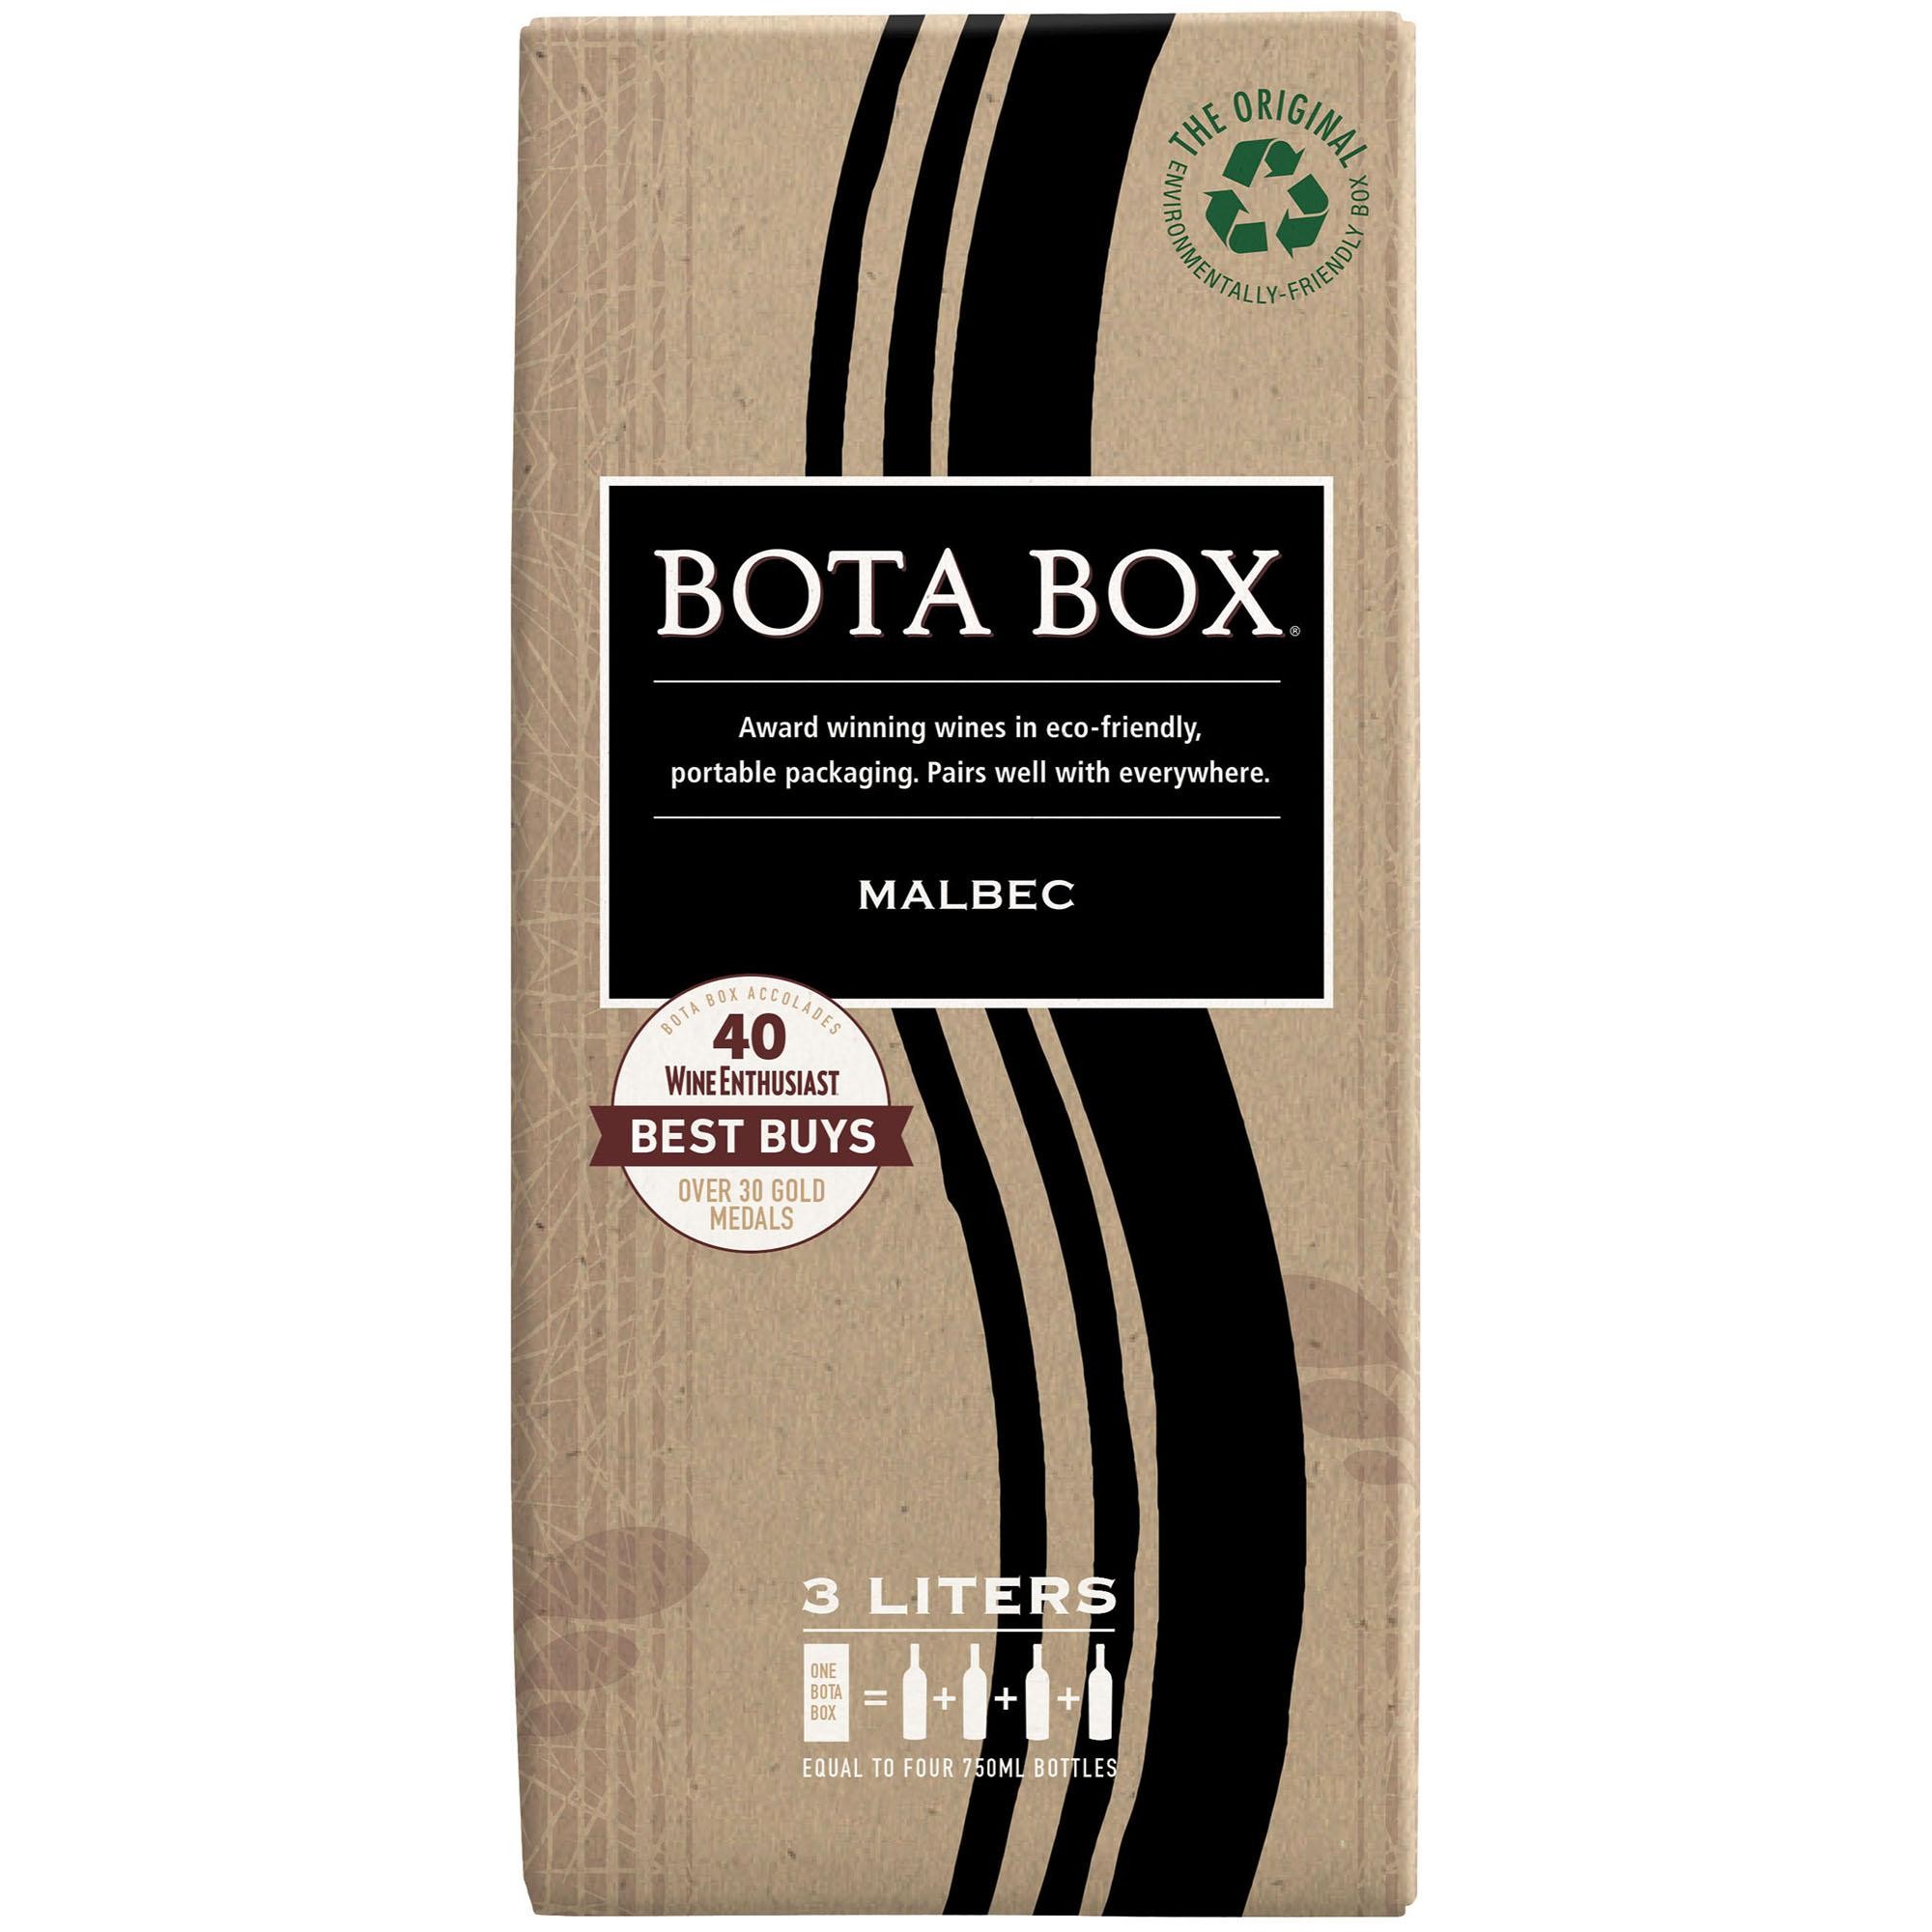 Bota Box Nighthawk Malbec - Argentina - 3l Box